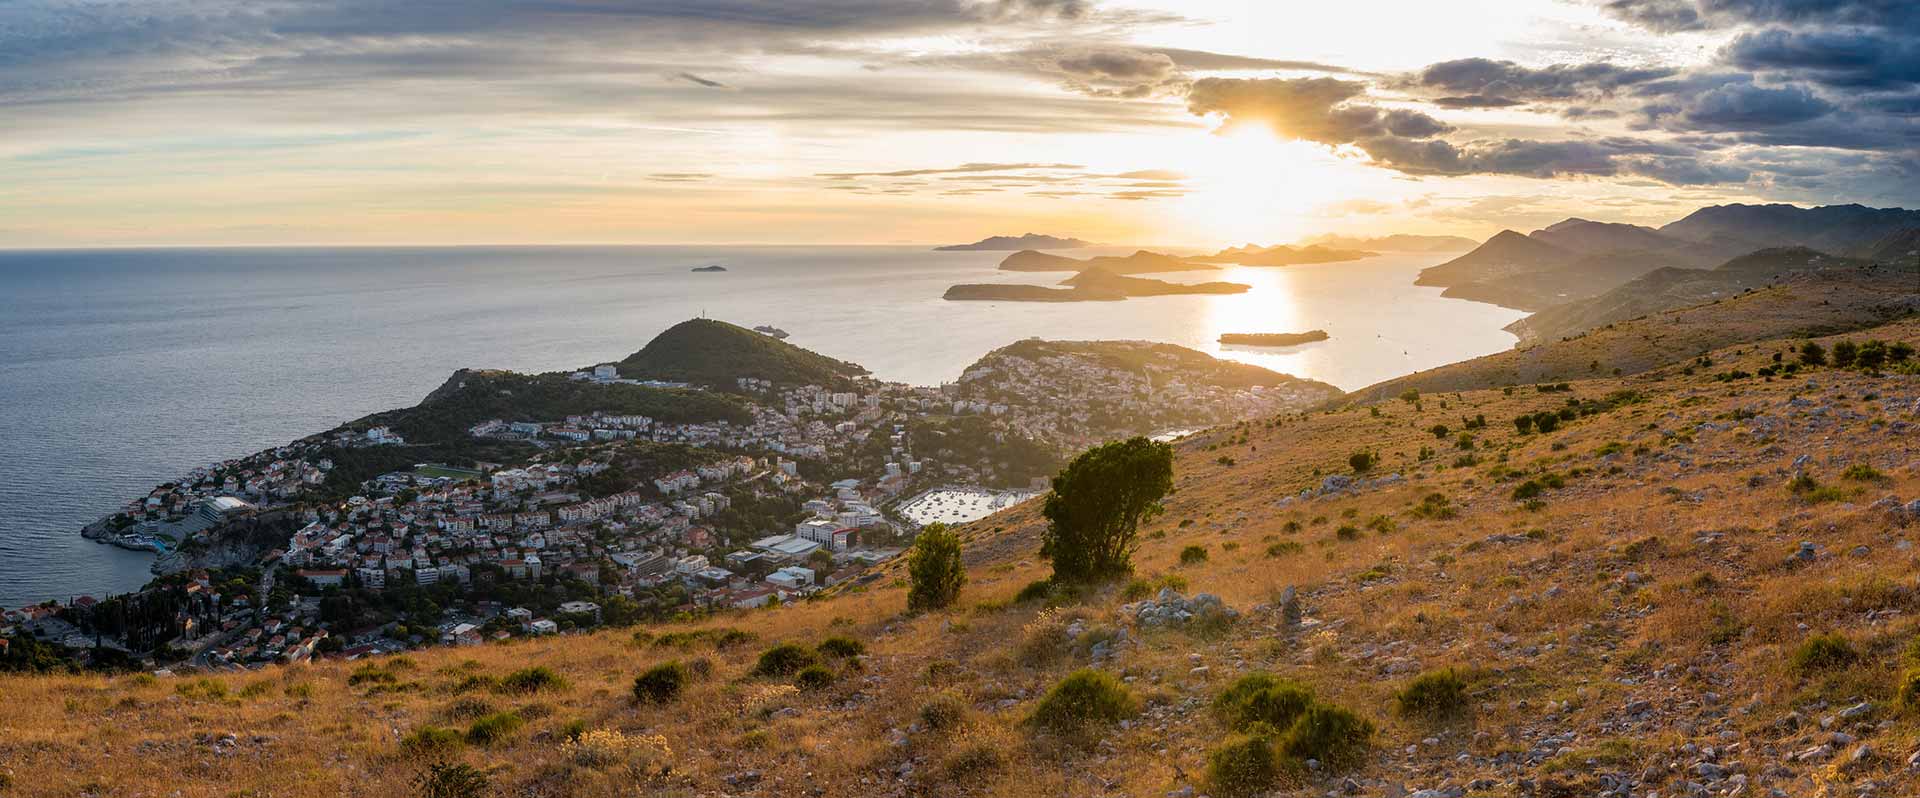 Panoramic view of Dubrovnik area